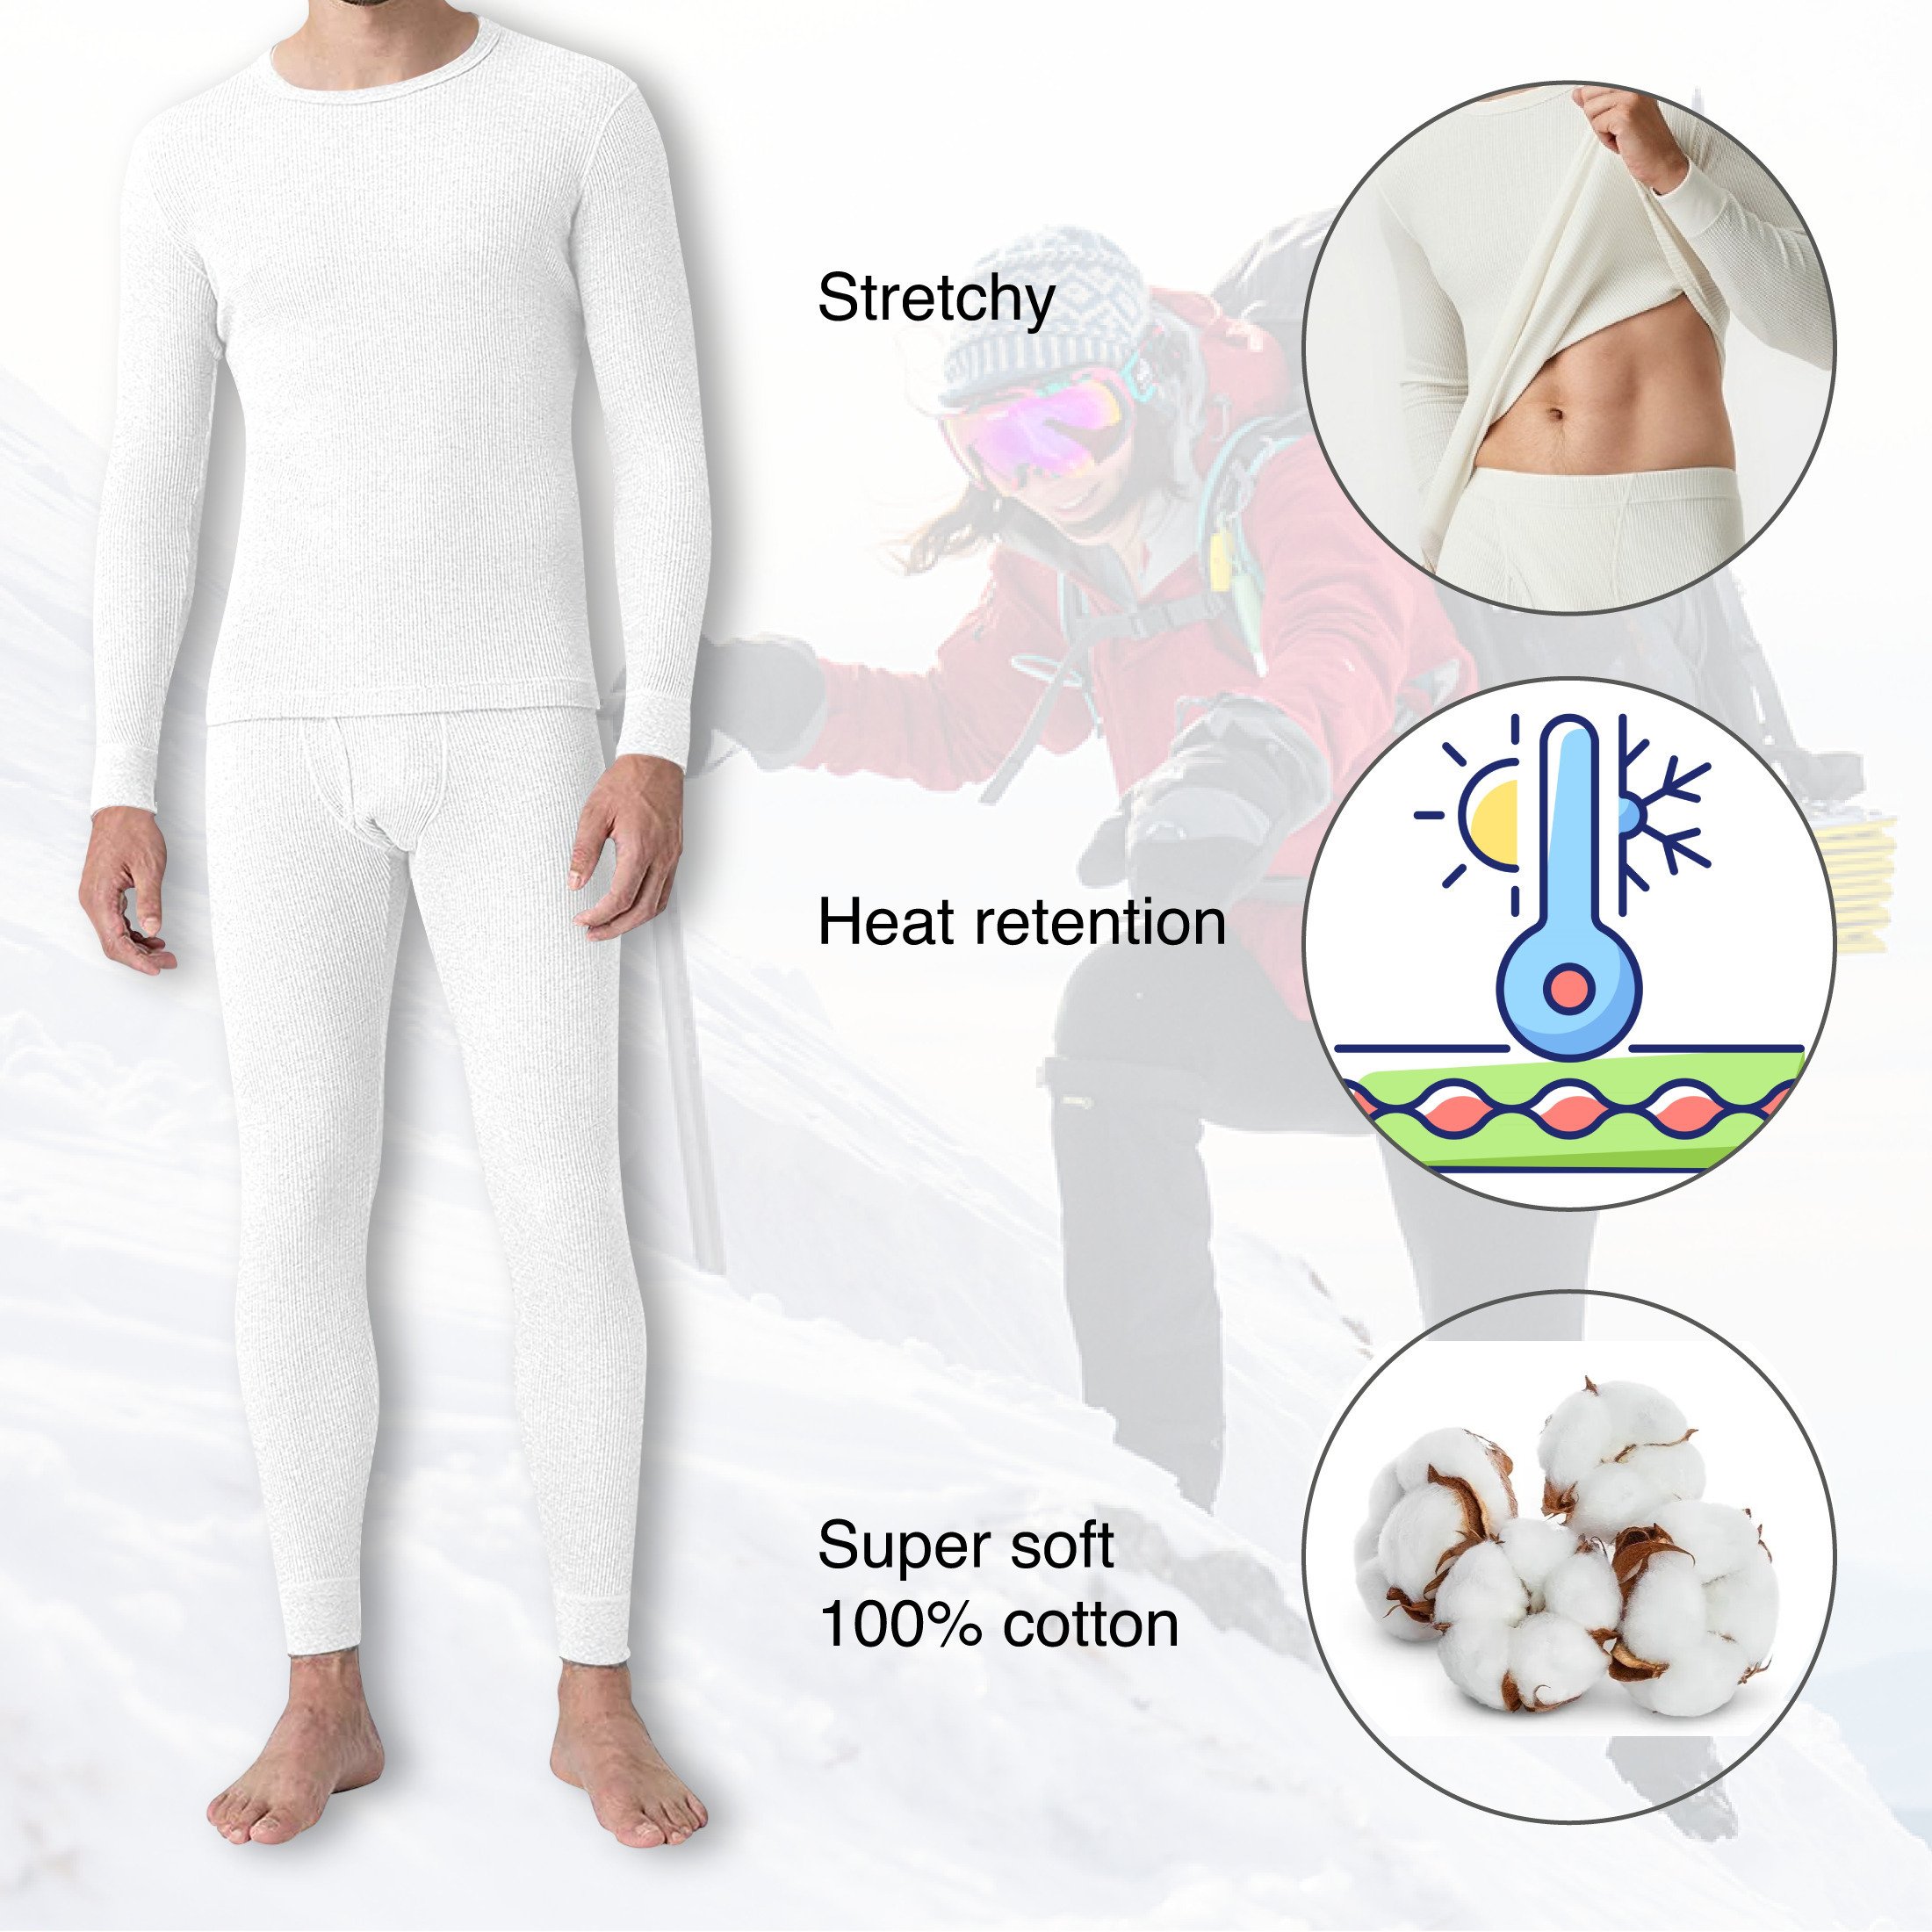 2-Sets: Men's Super Soft Cotton Waffle Knit Winter Thermal Underwear Set - Grey & Grey, Medium